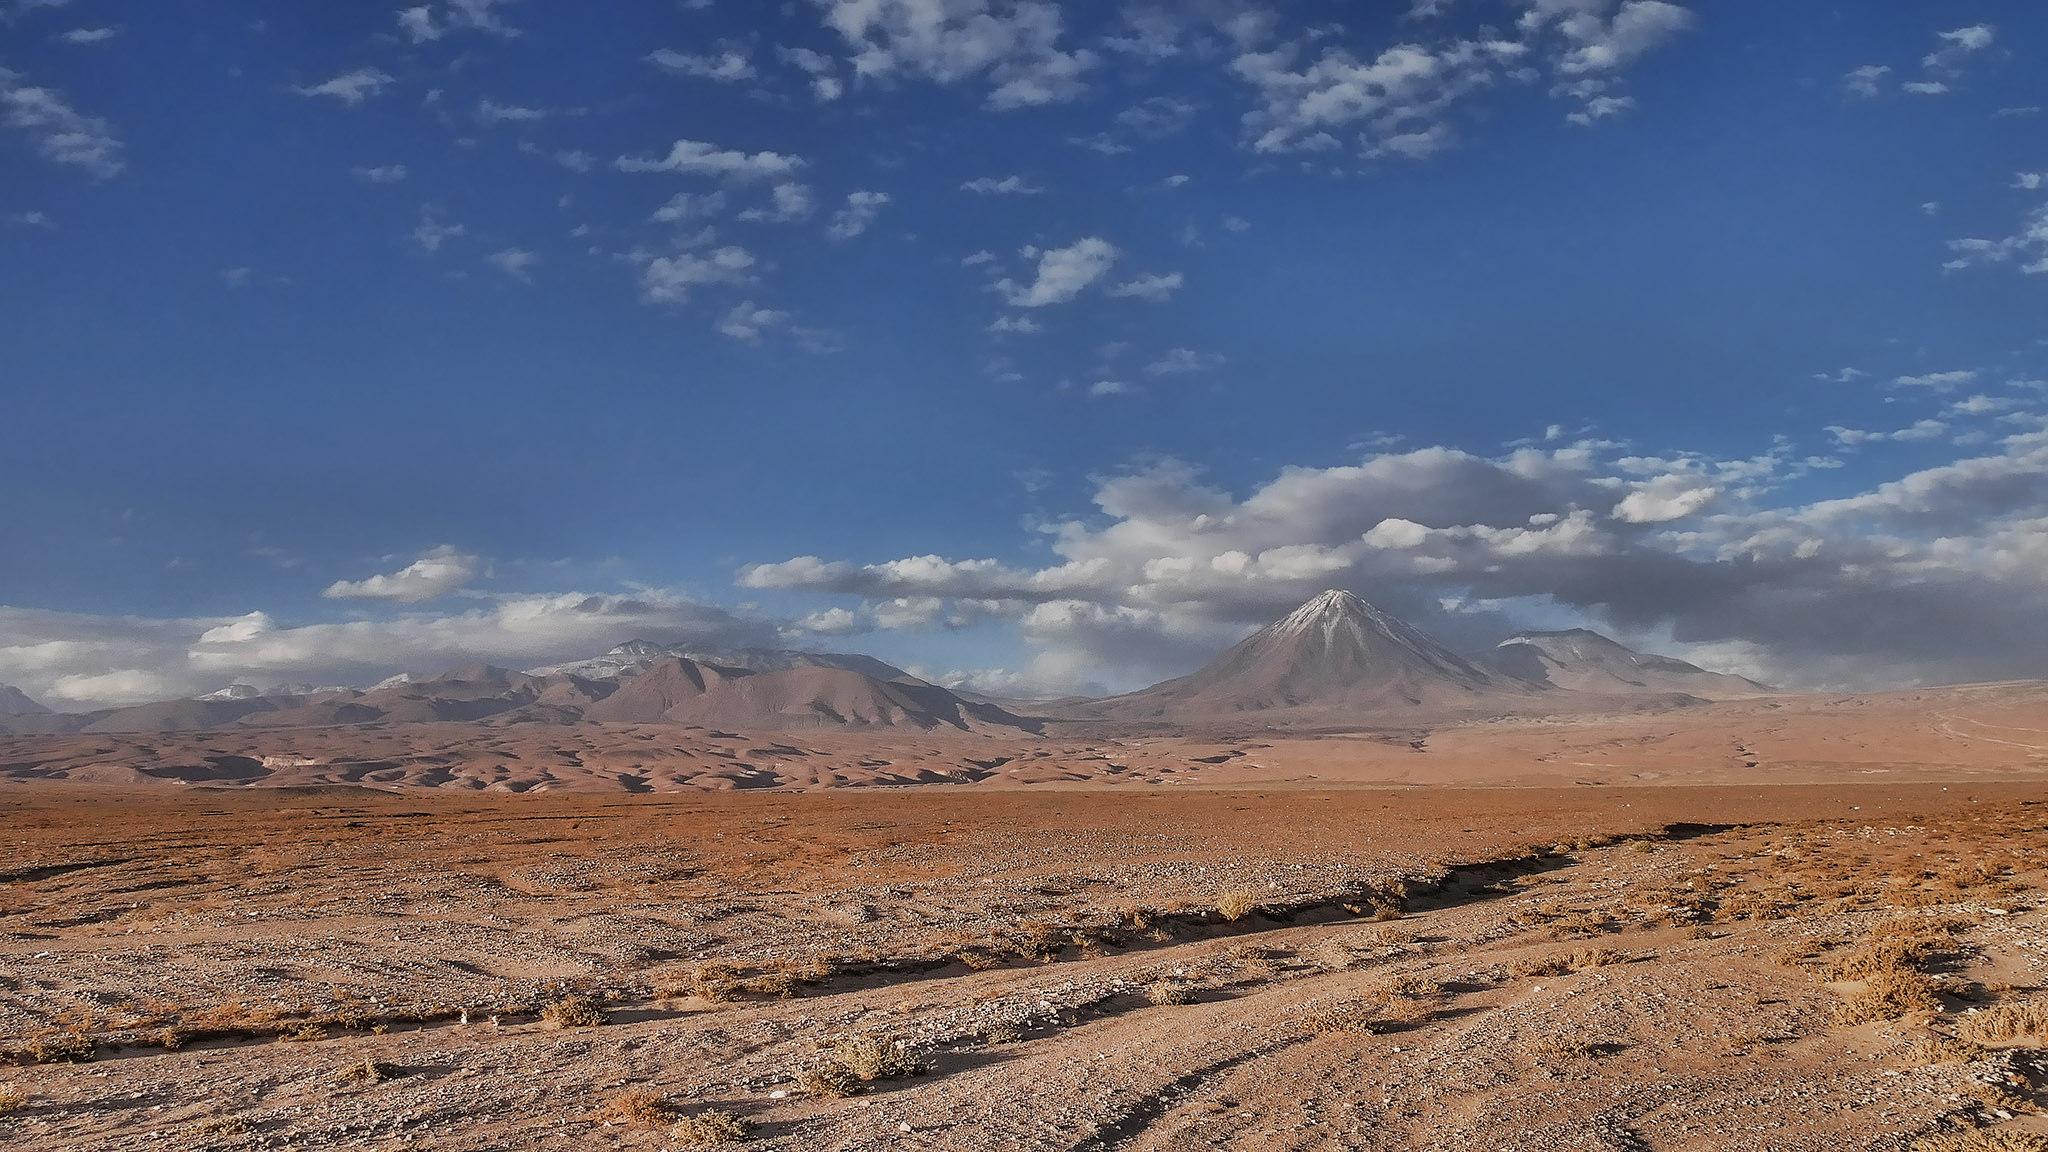 FileLicancabur Volcano, Atacama Desert, Chile